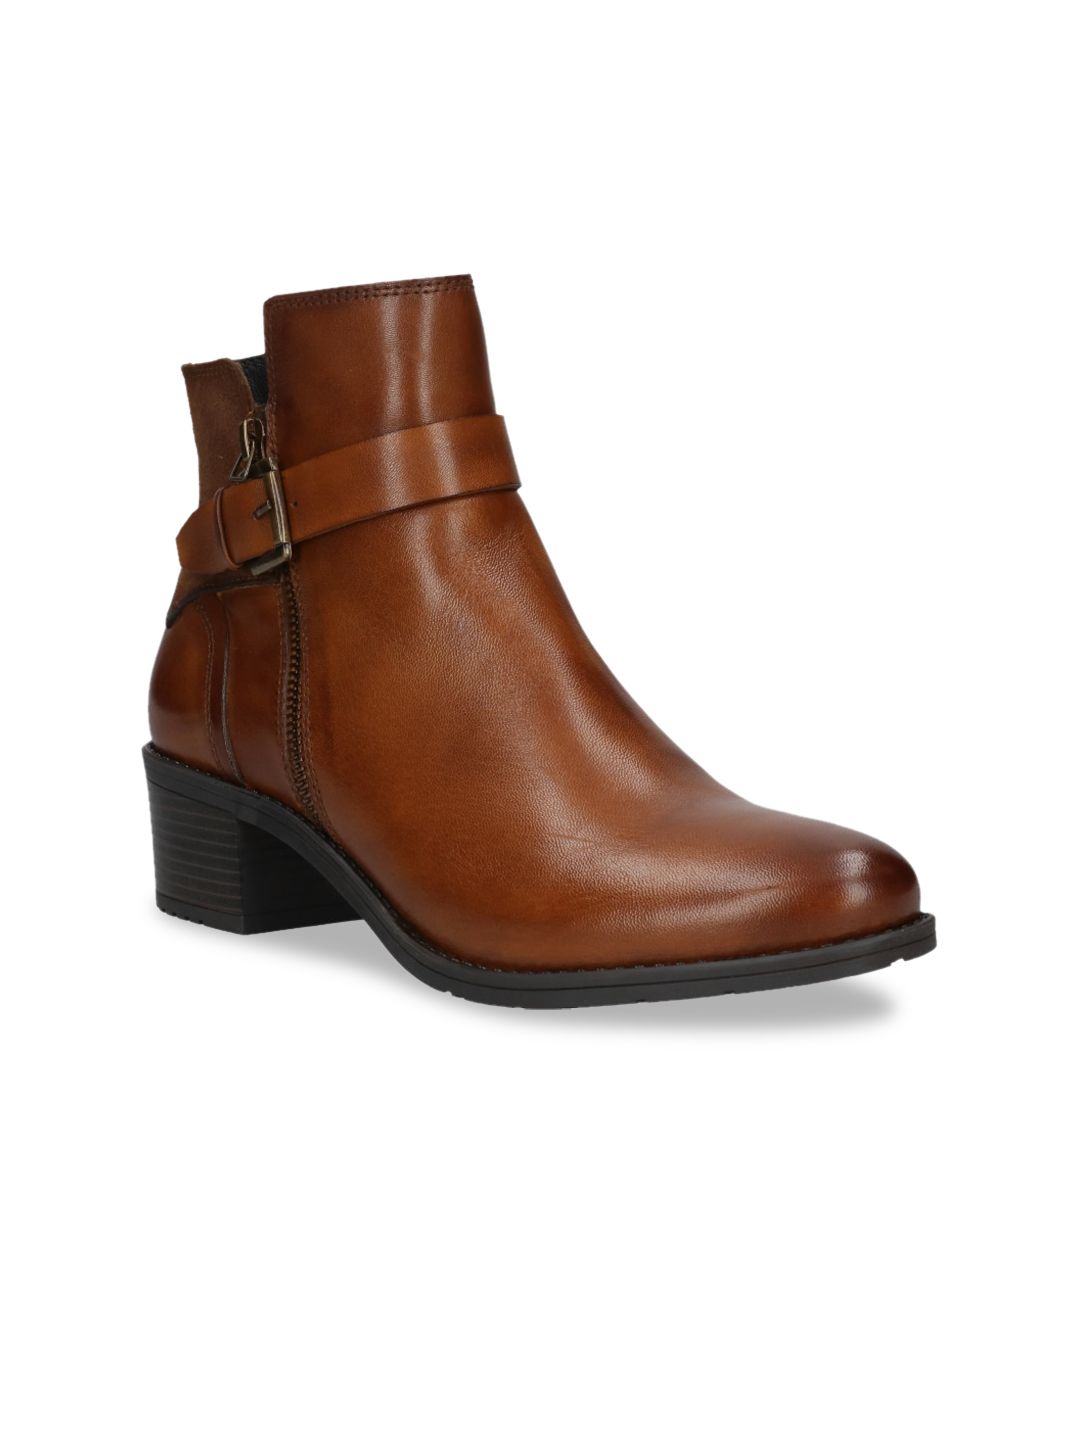 Bugatti Women Brown Leather High-Top Block Heeled Boots Price in India